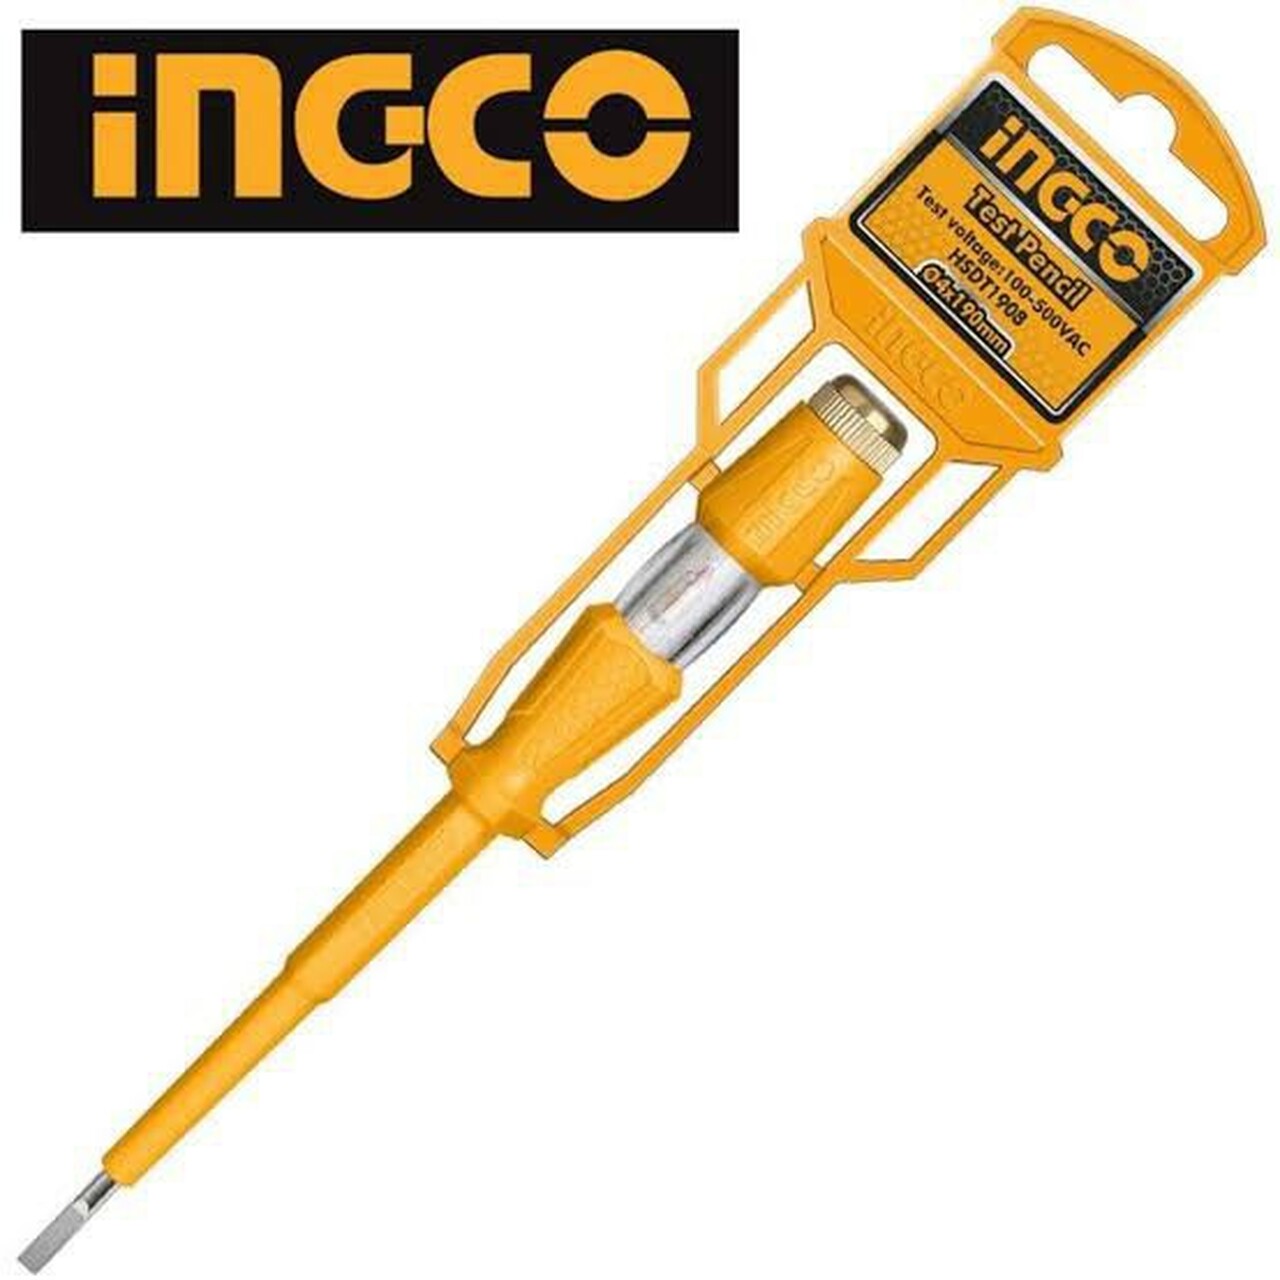 Buy Ingco Hsdt1908 Test Pencil Online On Qetaat.Com